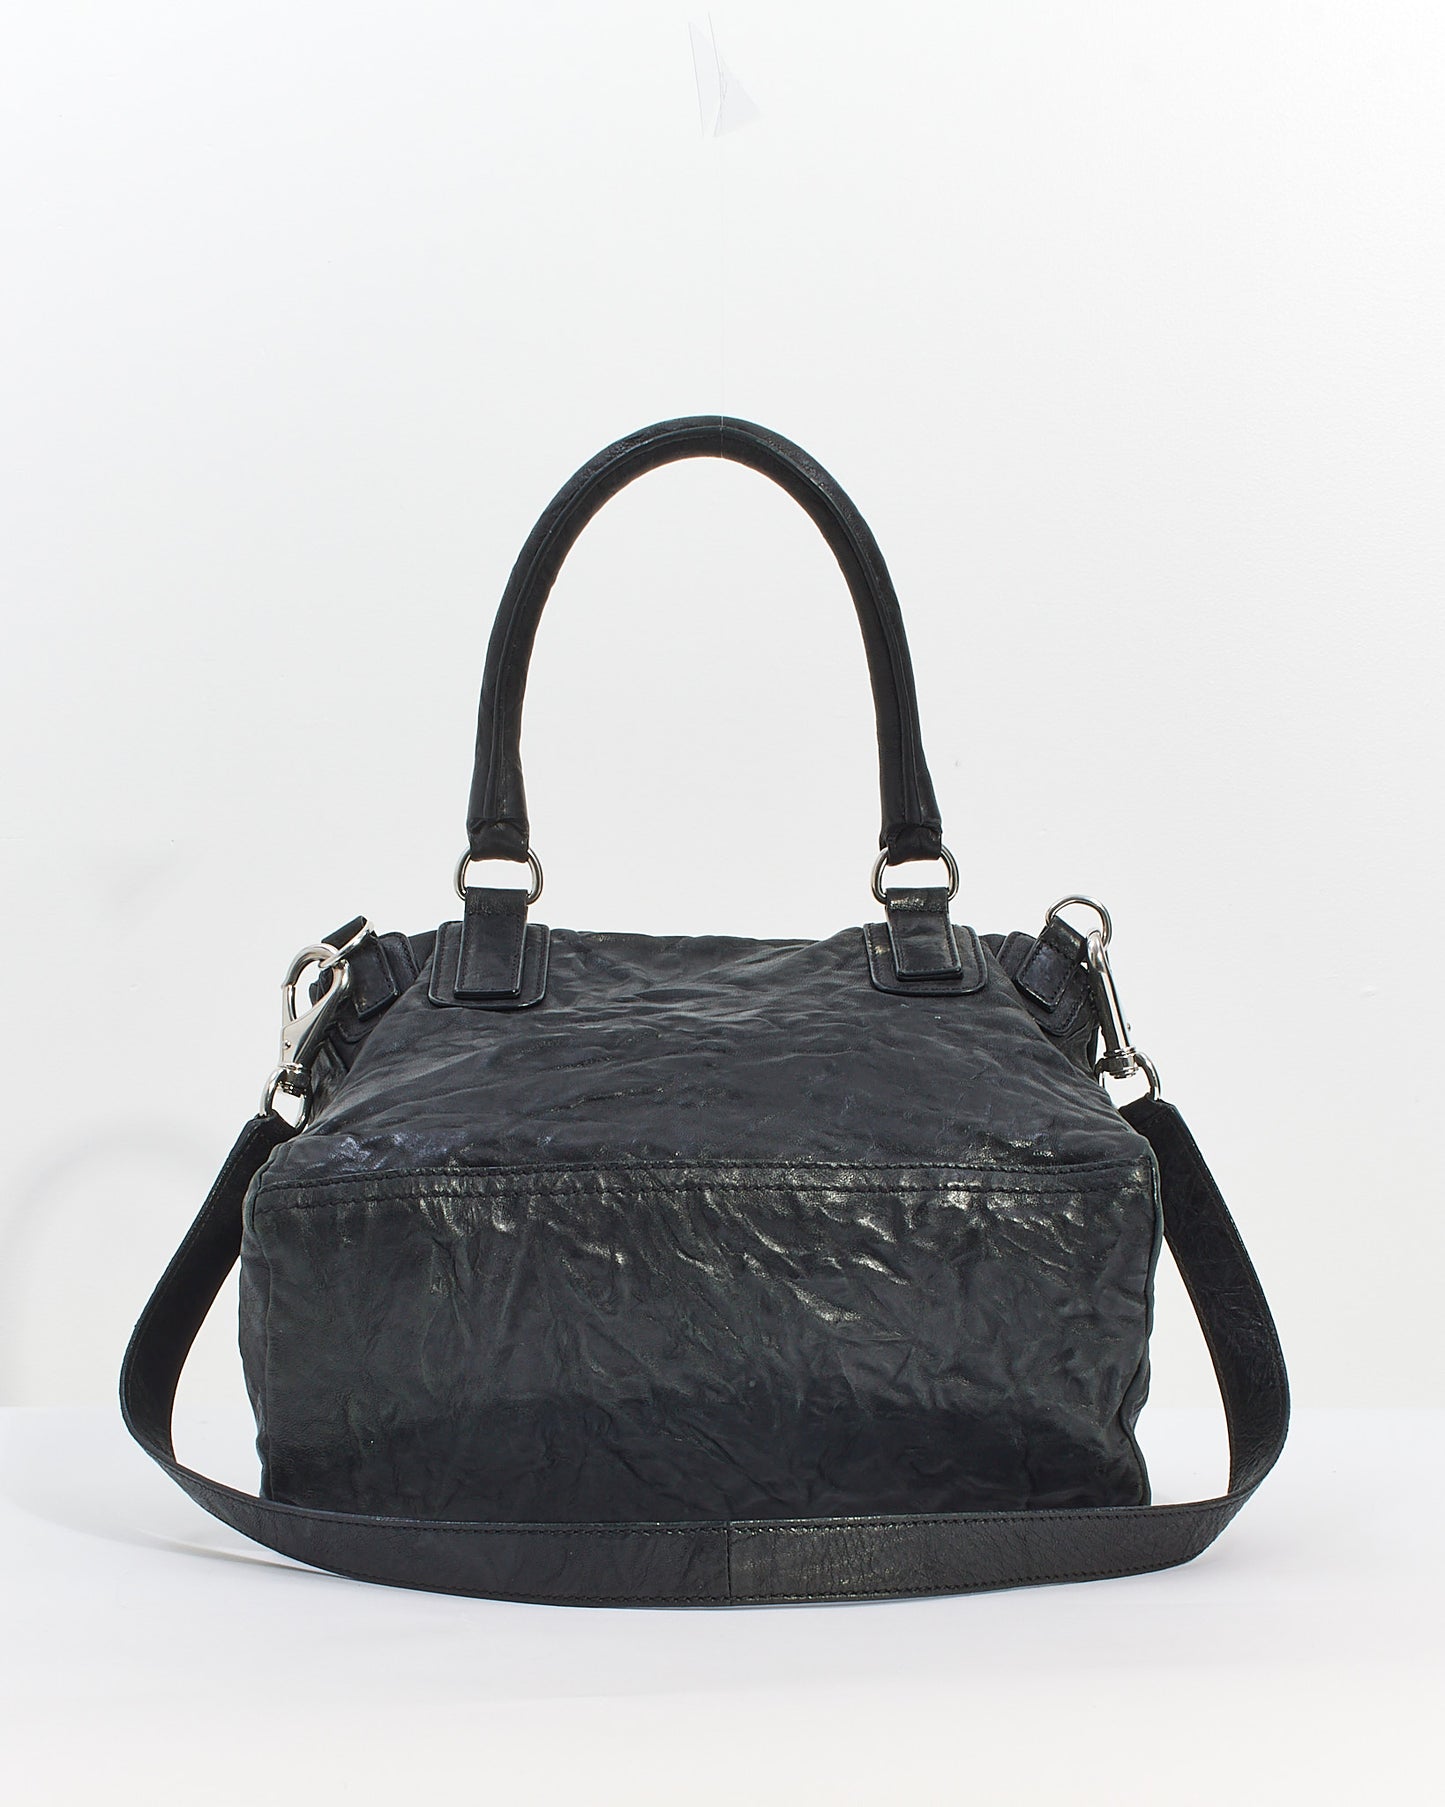 Givenchy Black Distressed Leather Medium Pandora Bag